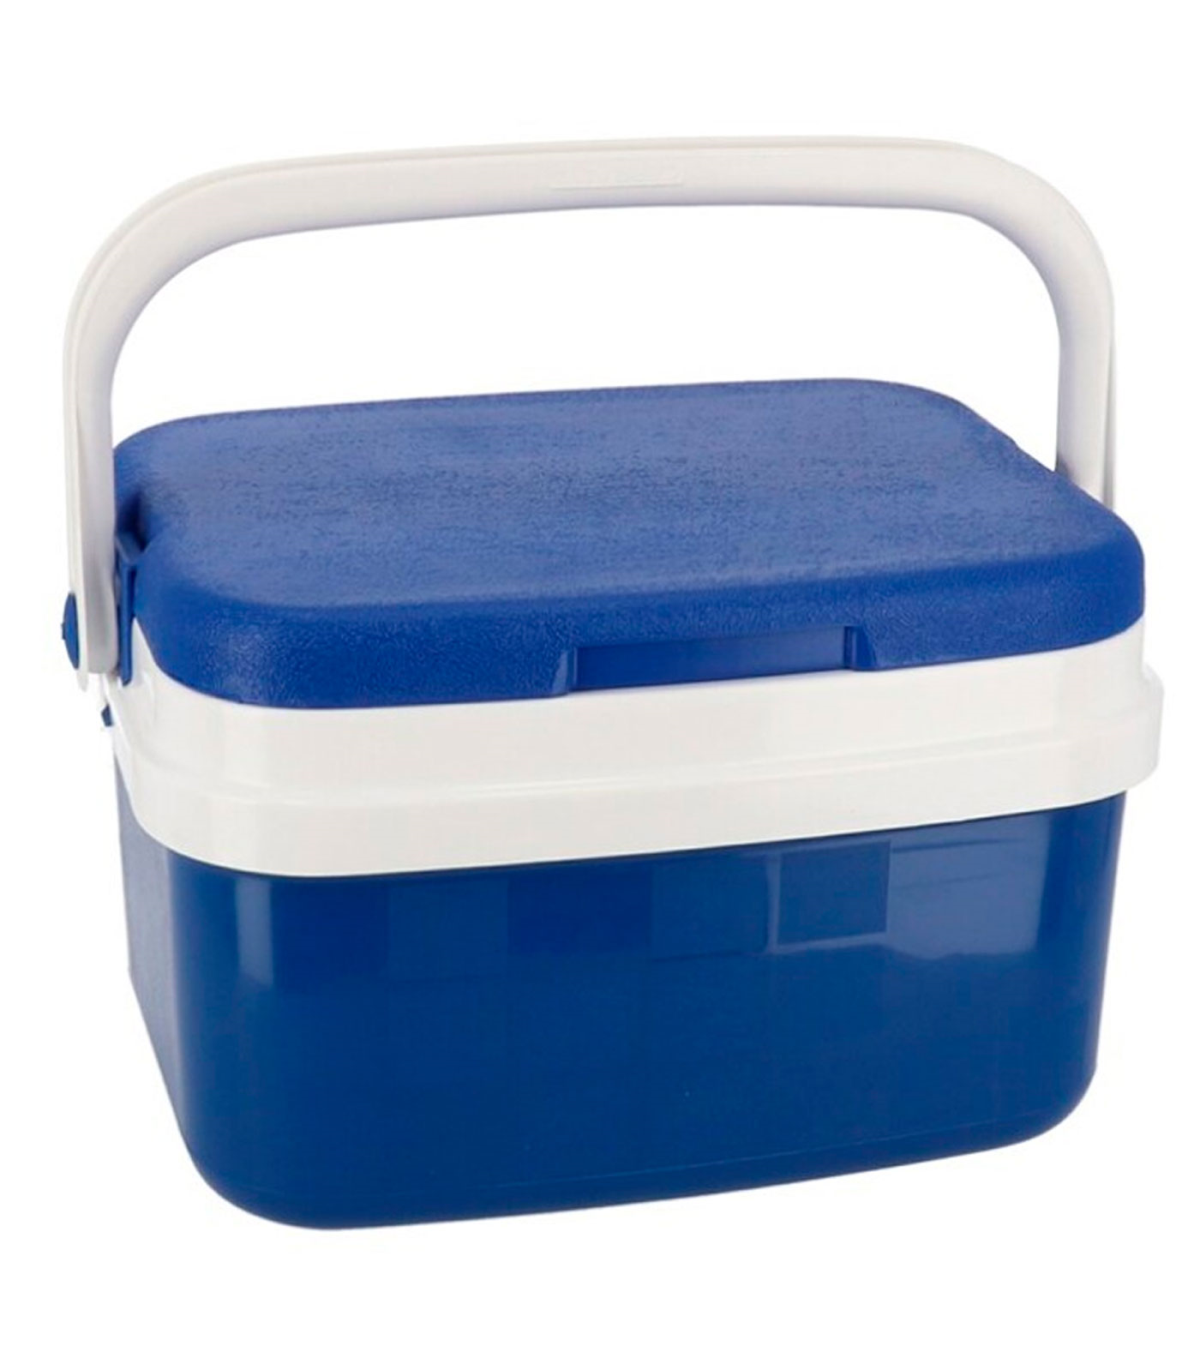 Nevera portátil con asa, 5 polipropileno,porta alimentos para playa, acampada, 19 x 26 cm, color azul y bl